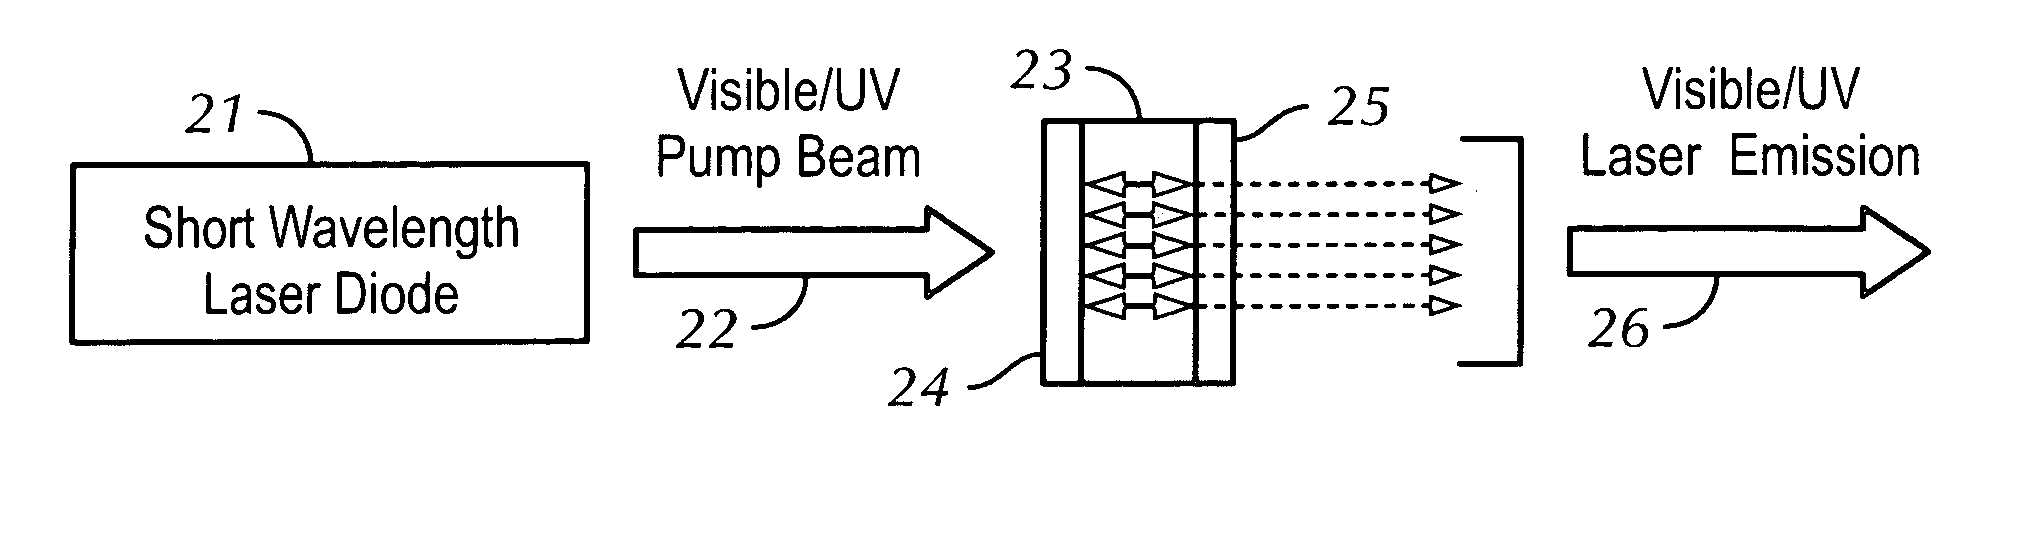 Short wavelength diode-pumped solid-state laser